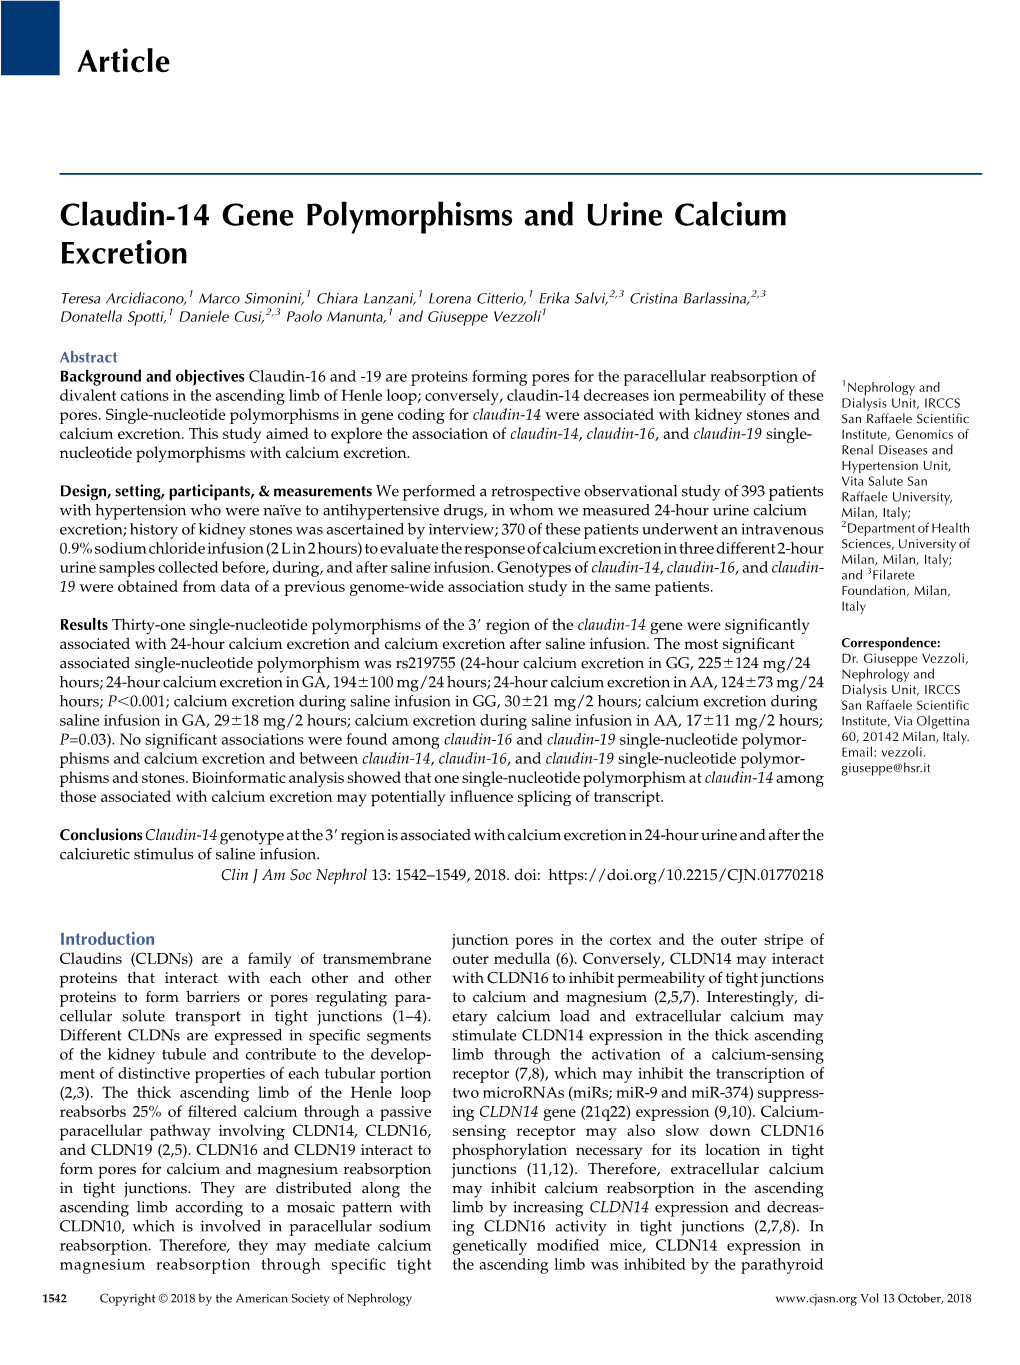 Claudin-14 Gene Polymorphisms and Urine Calcium Excretion